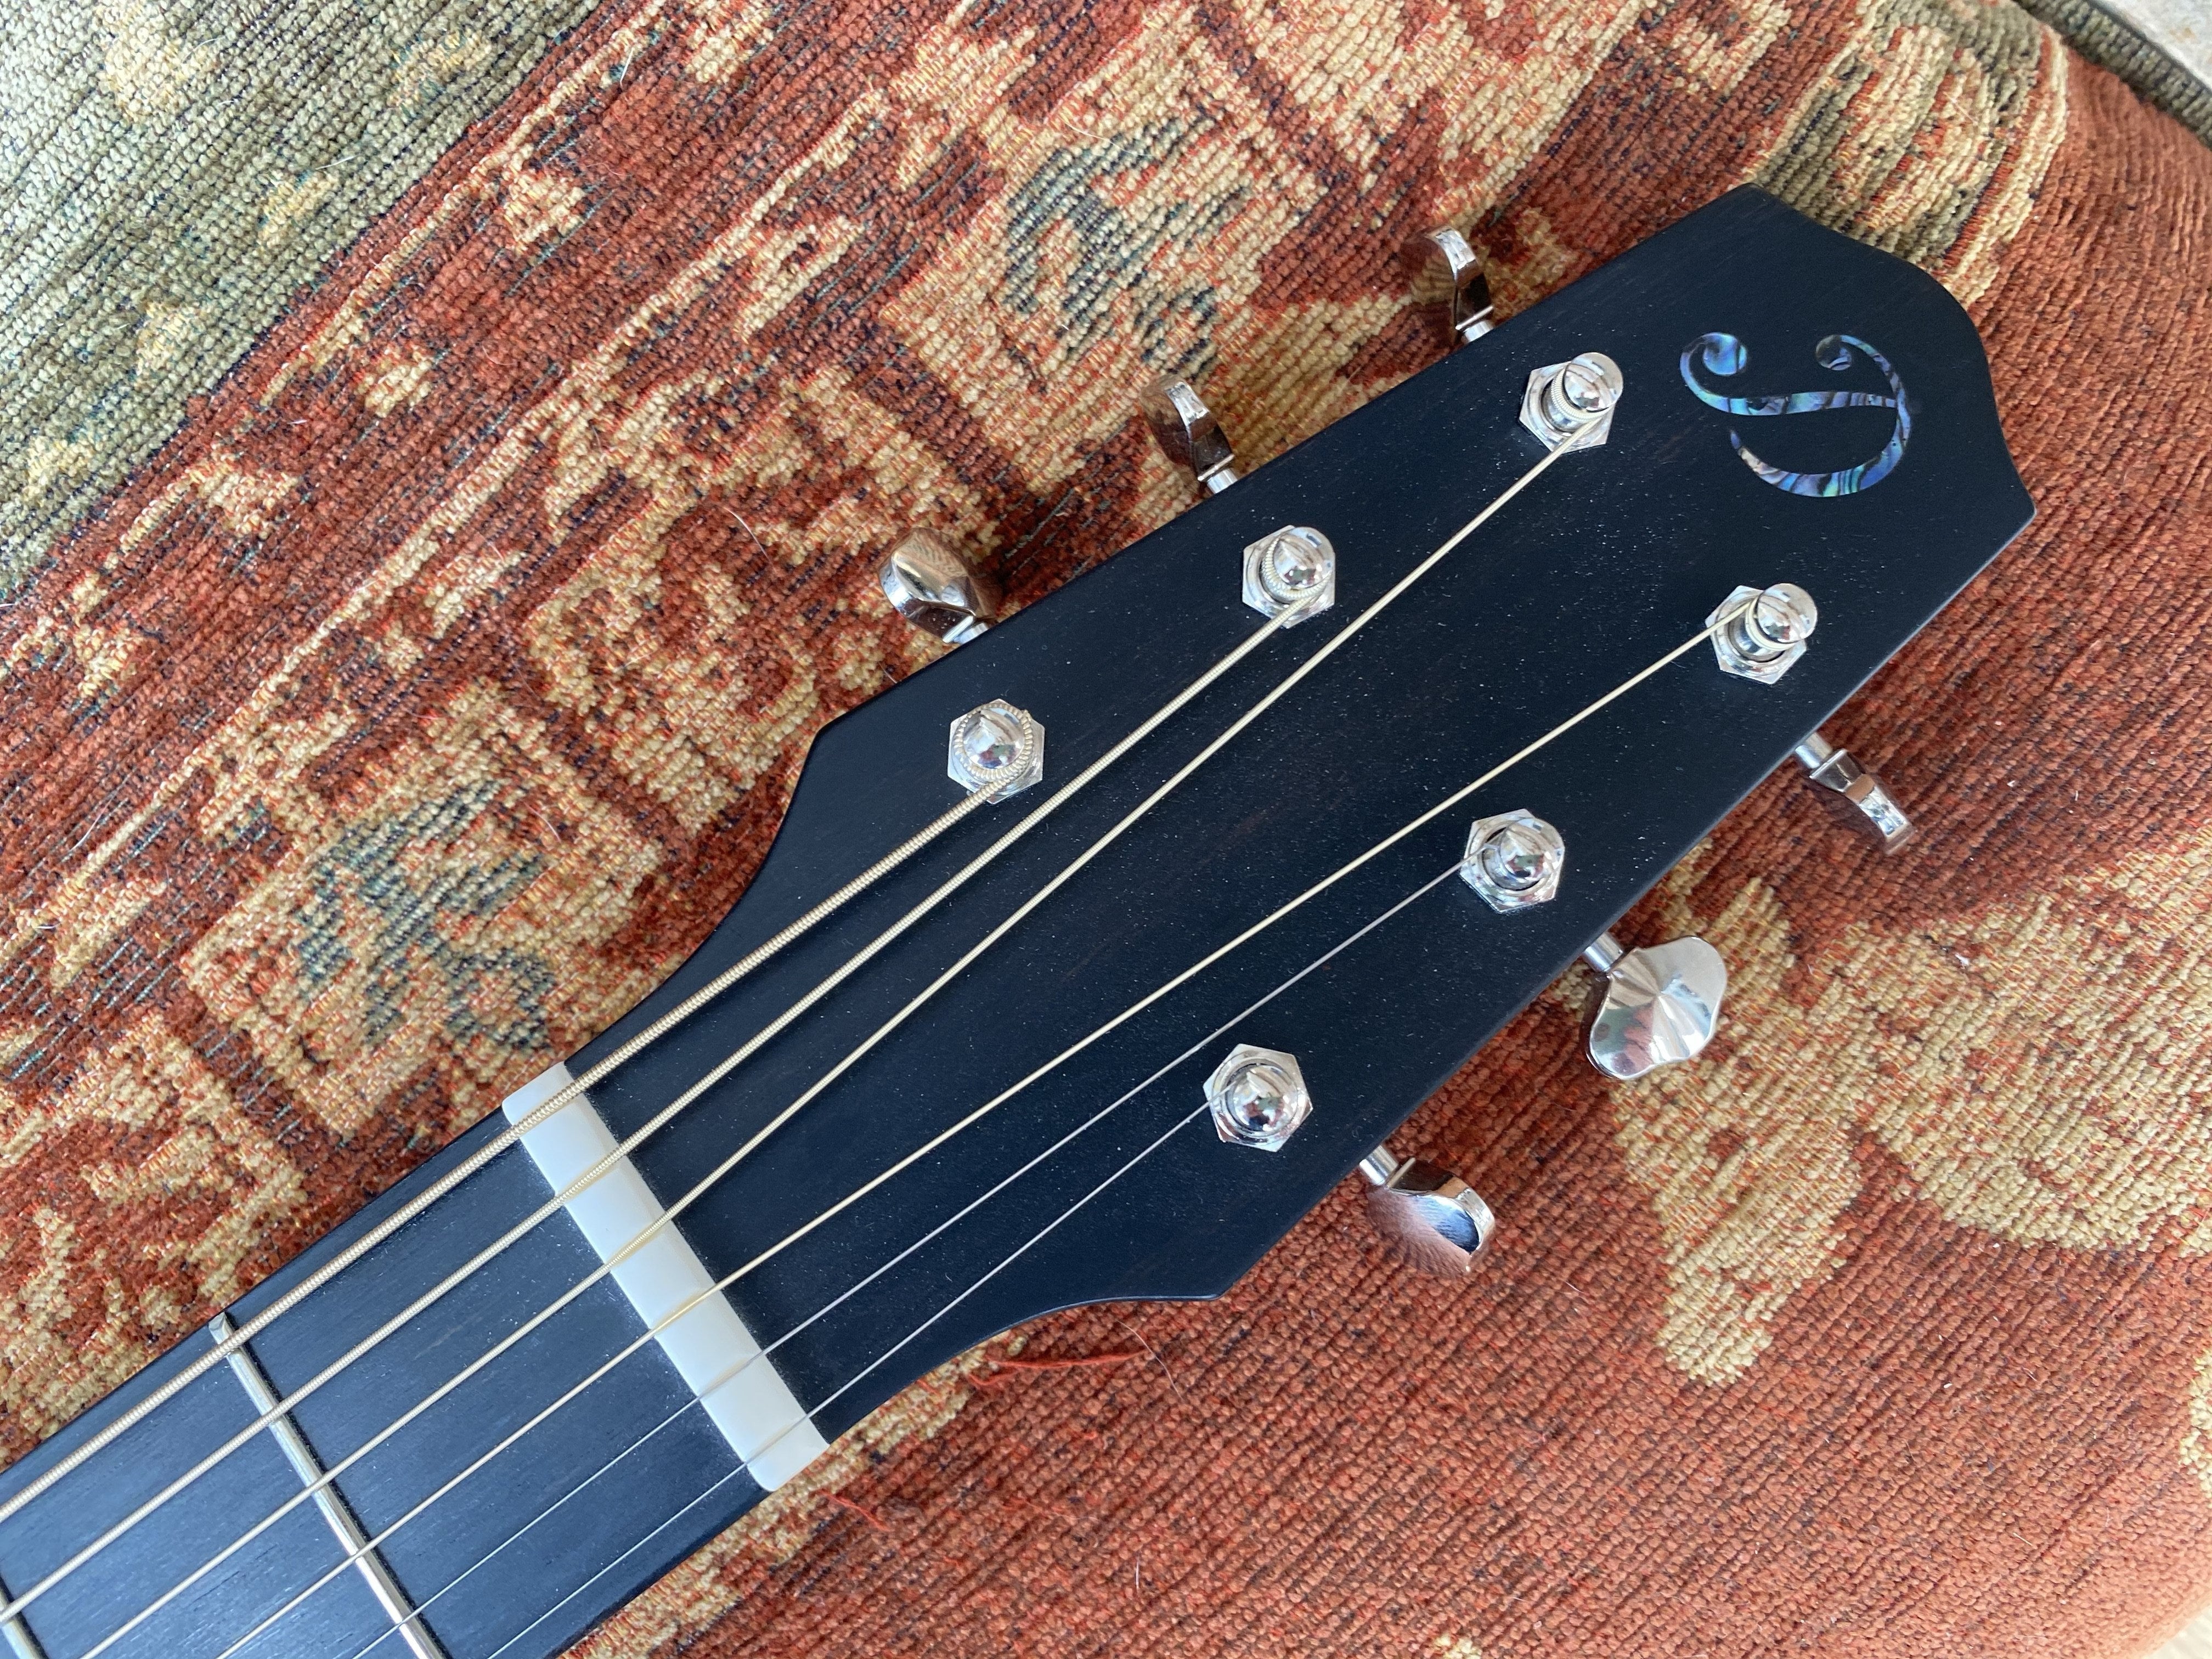 Dowina Master Built DUB BV (Slovakian Oak), Acoustic Guitar for sale at Richards Guitars.